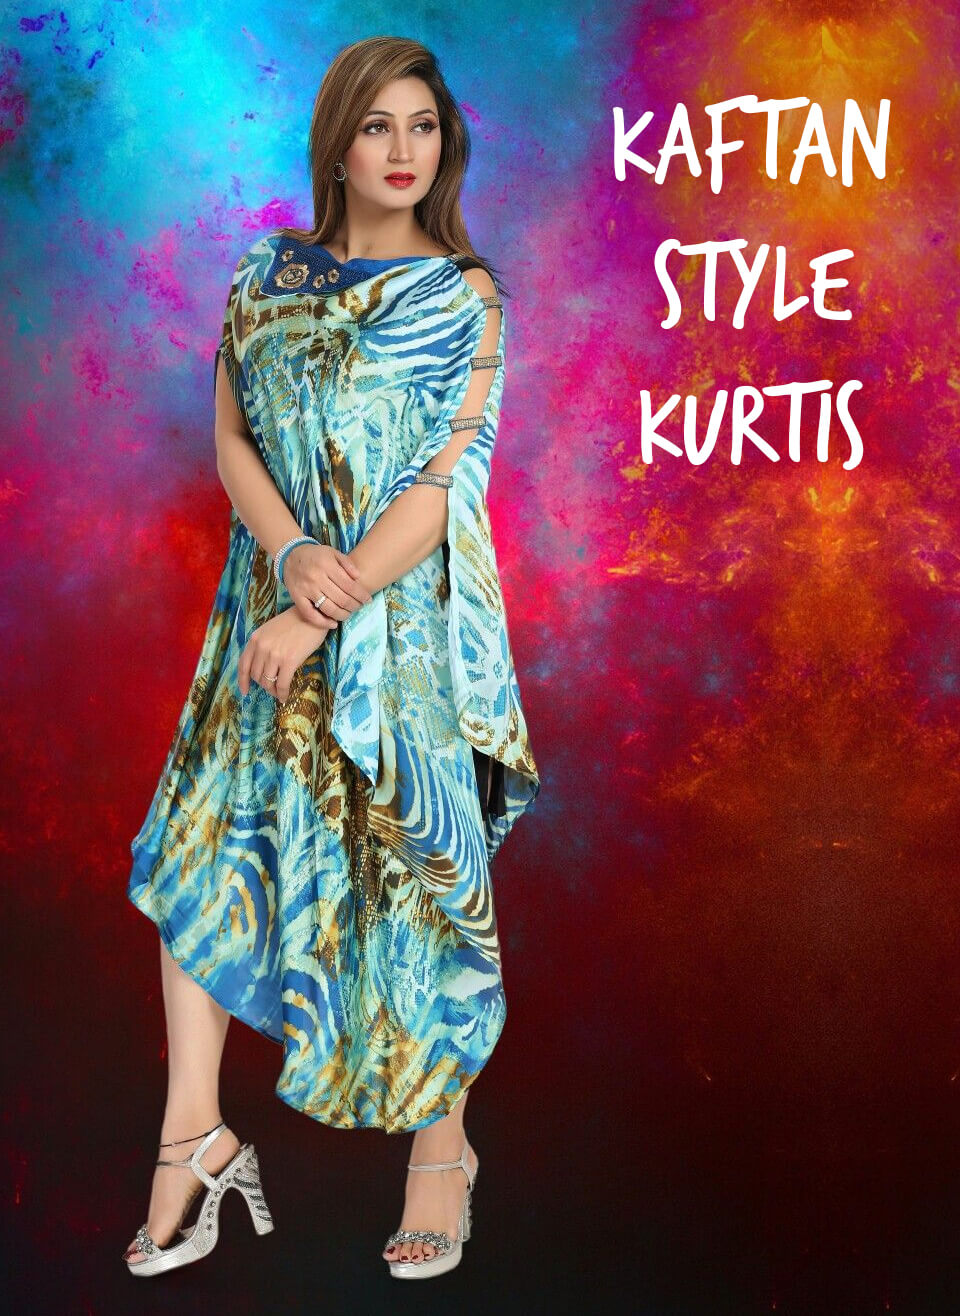 Kaftan style kurti fashion